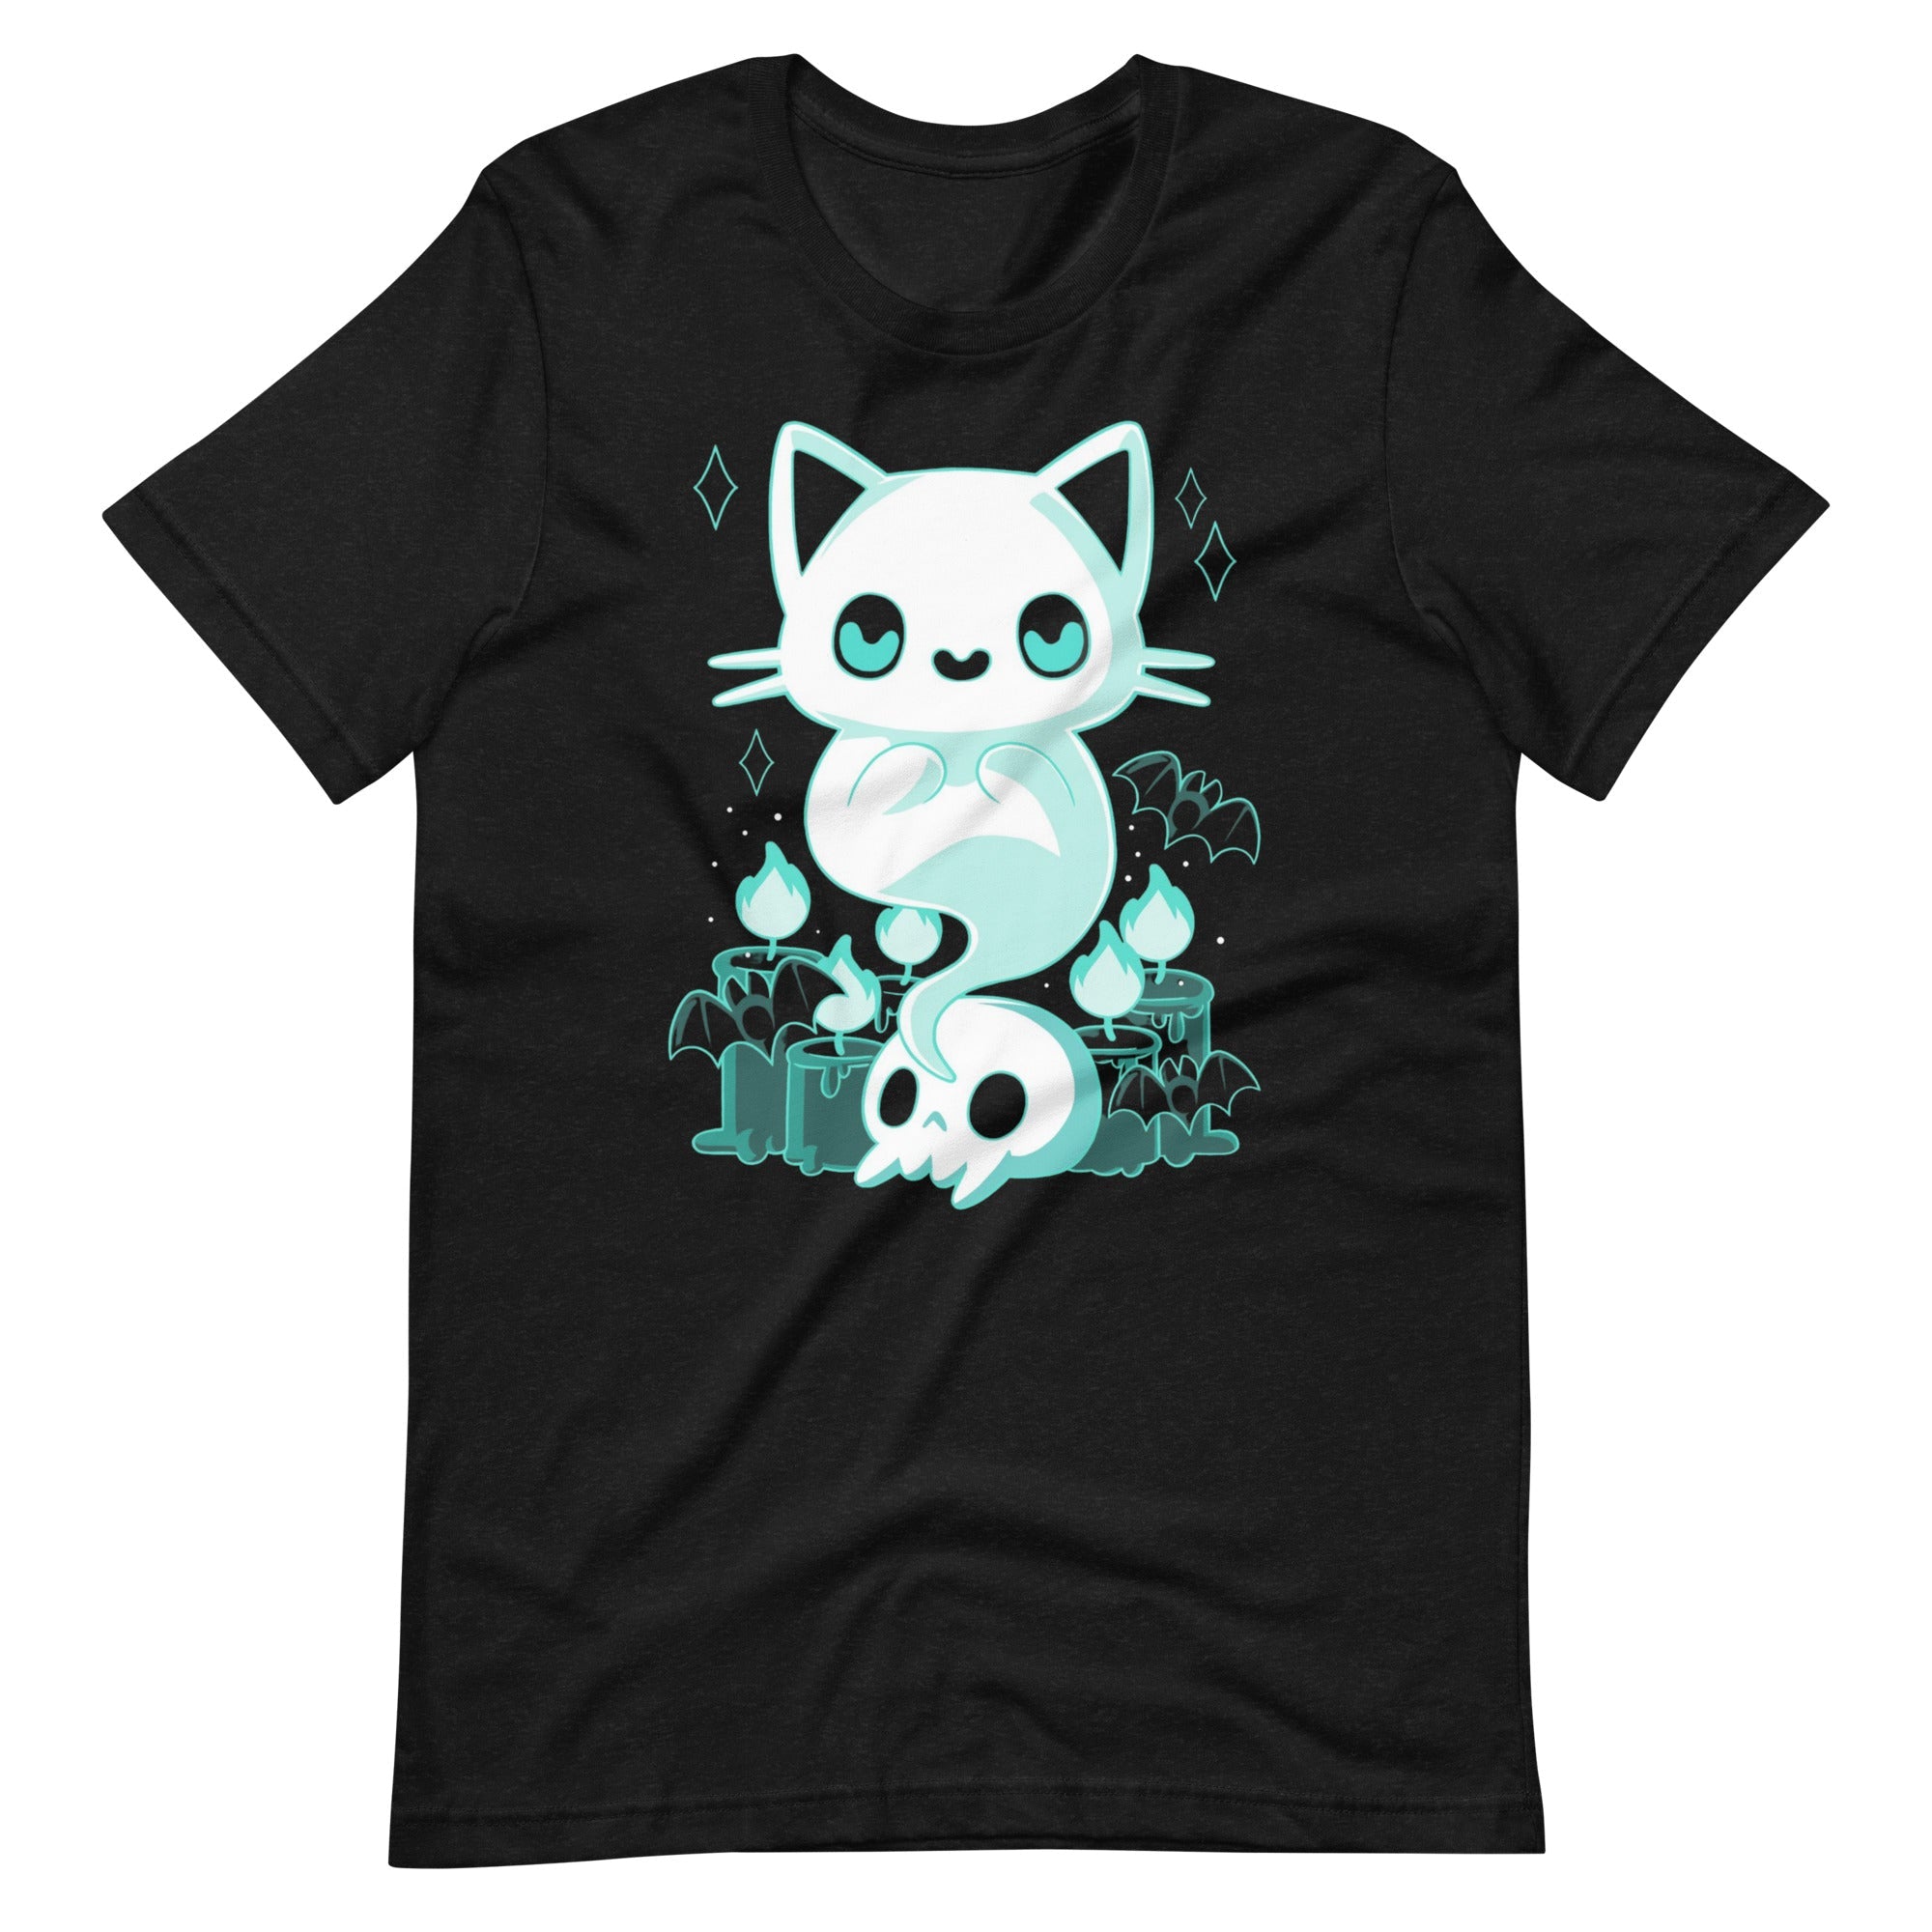 Cats Ghost shirt